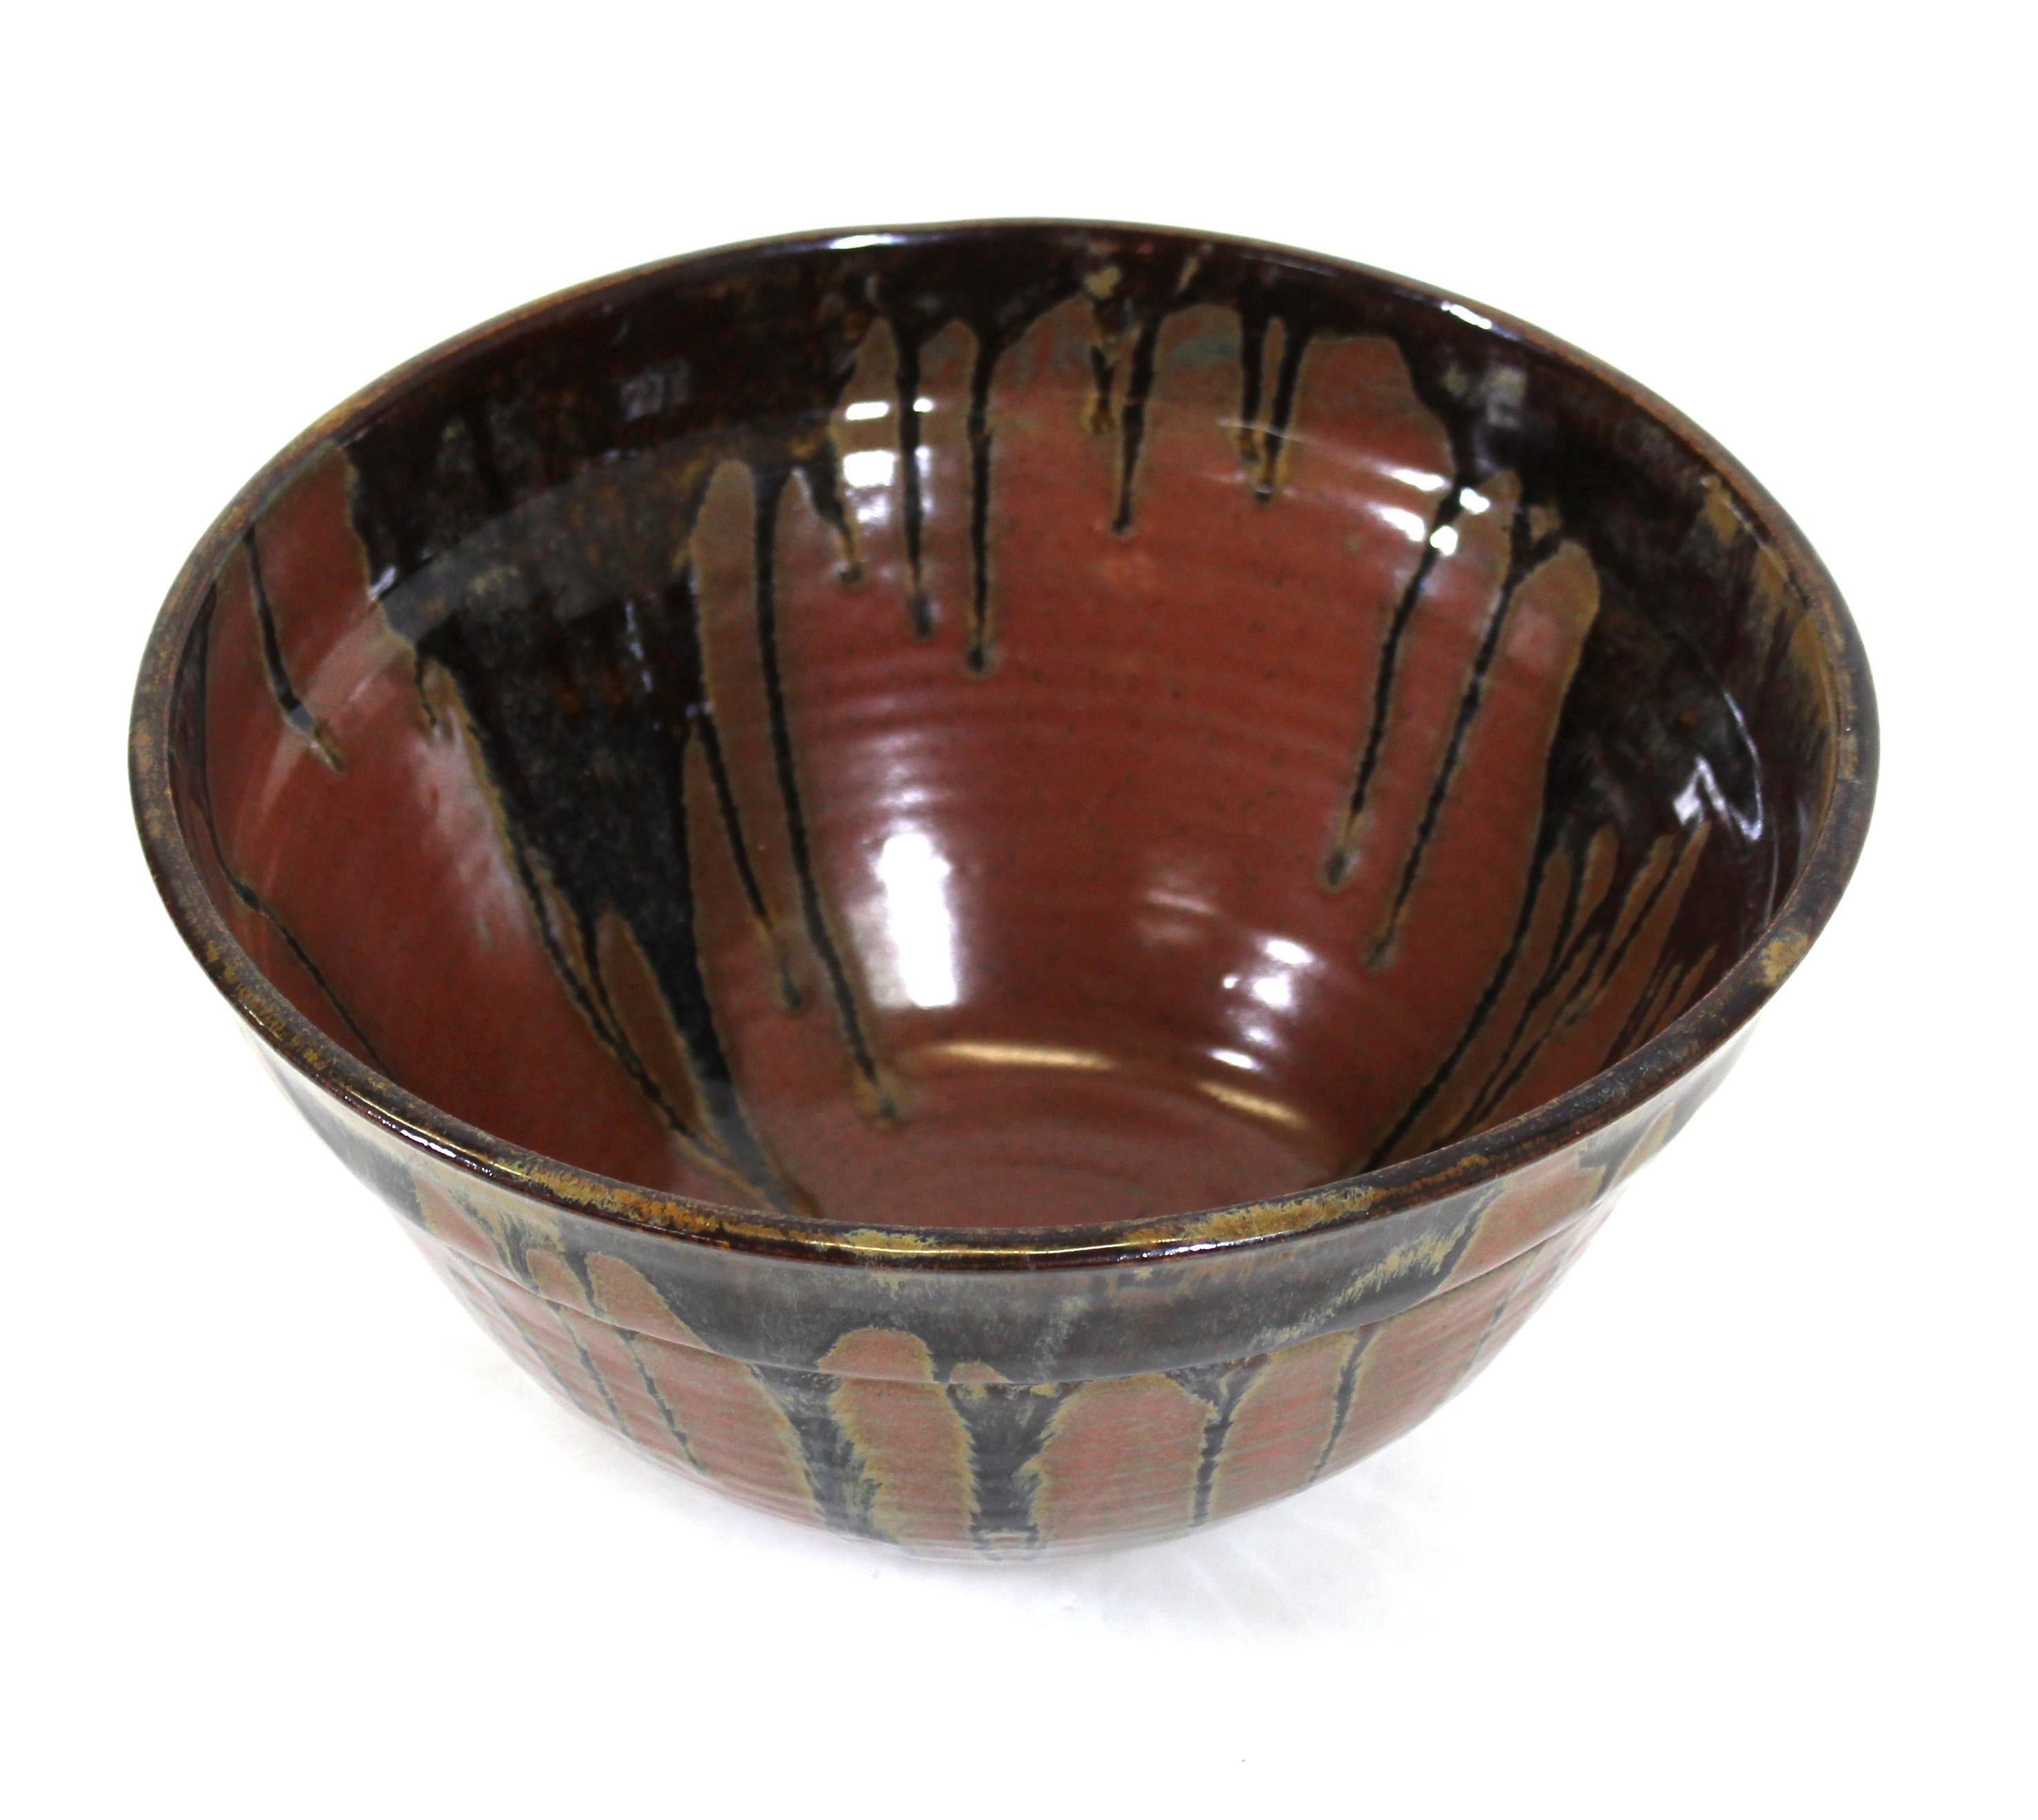 Mid-Century Modern art Studio Pottery bowl with Kaki-style glaze, possibly Japanese, signed on bottom.